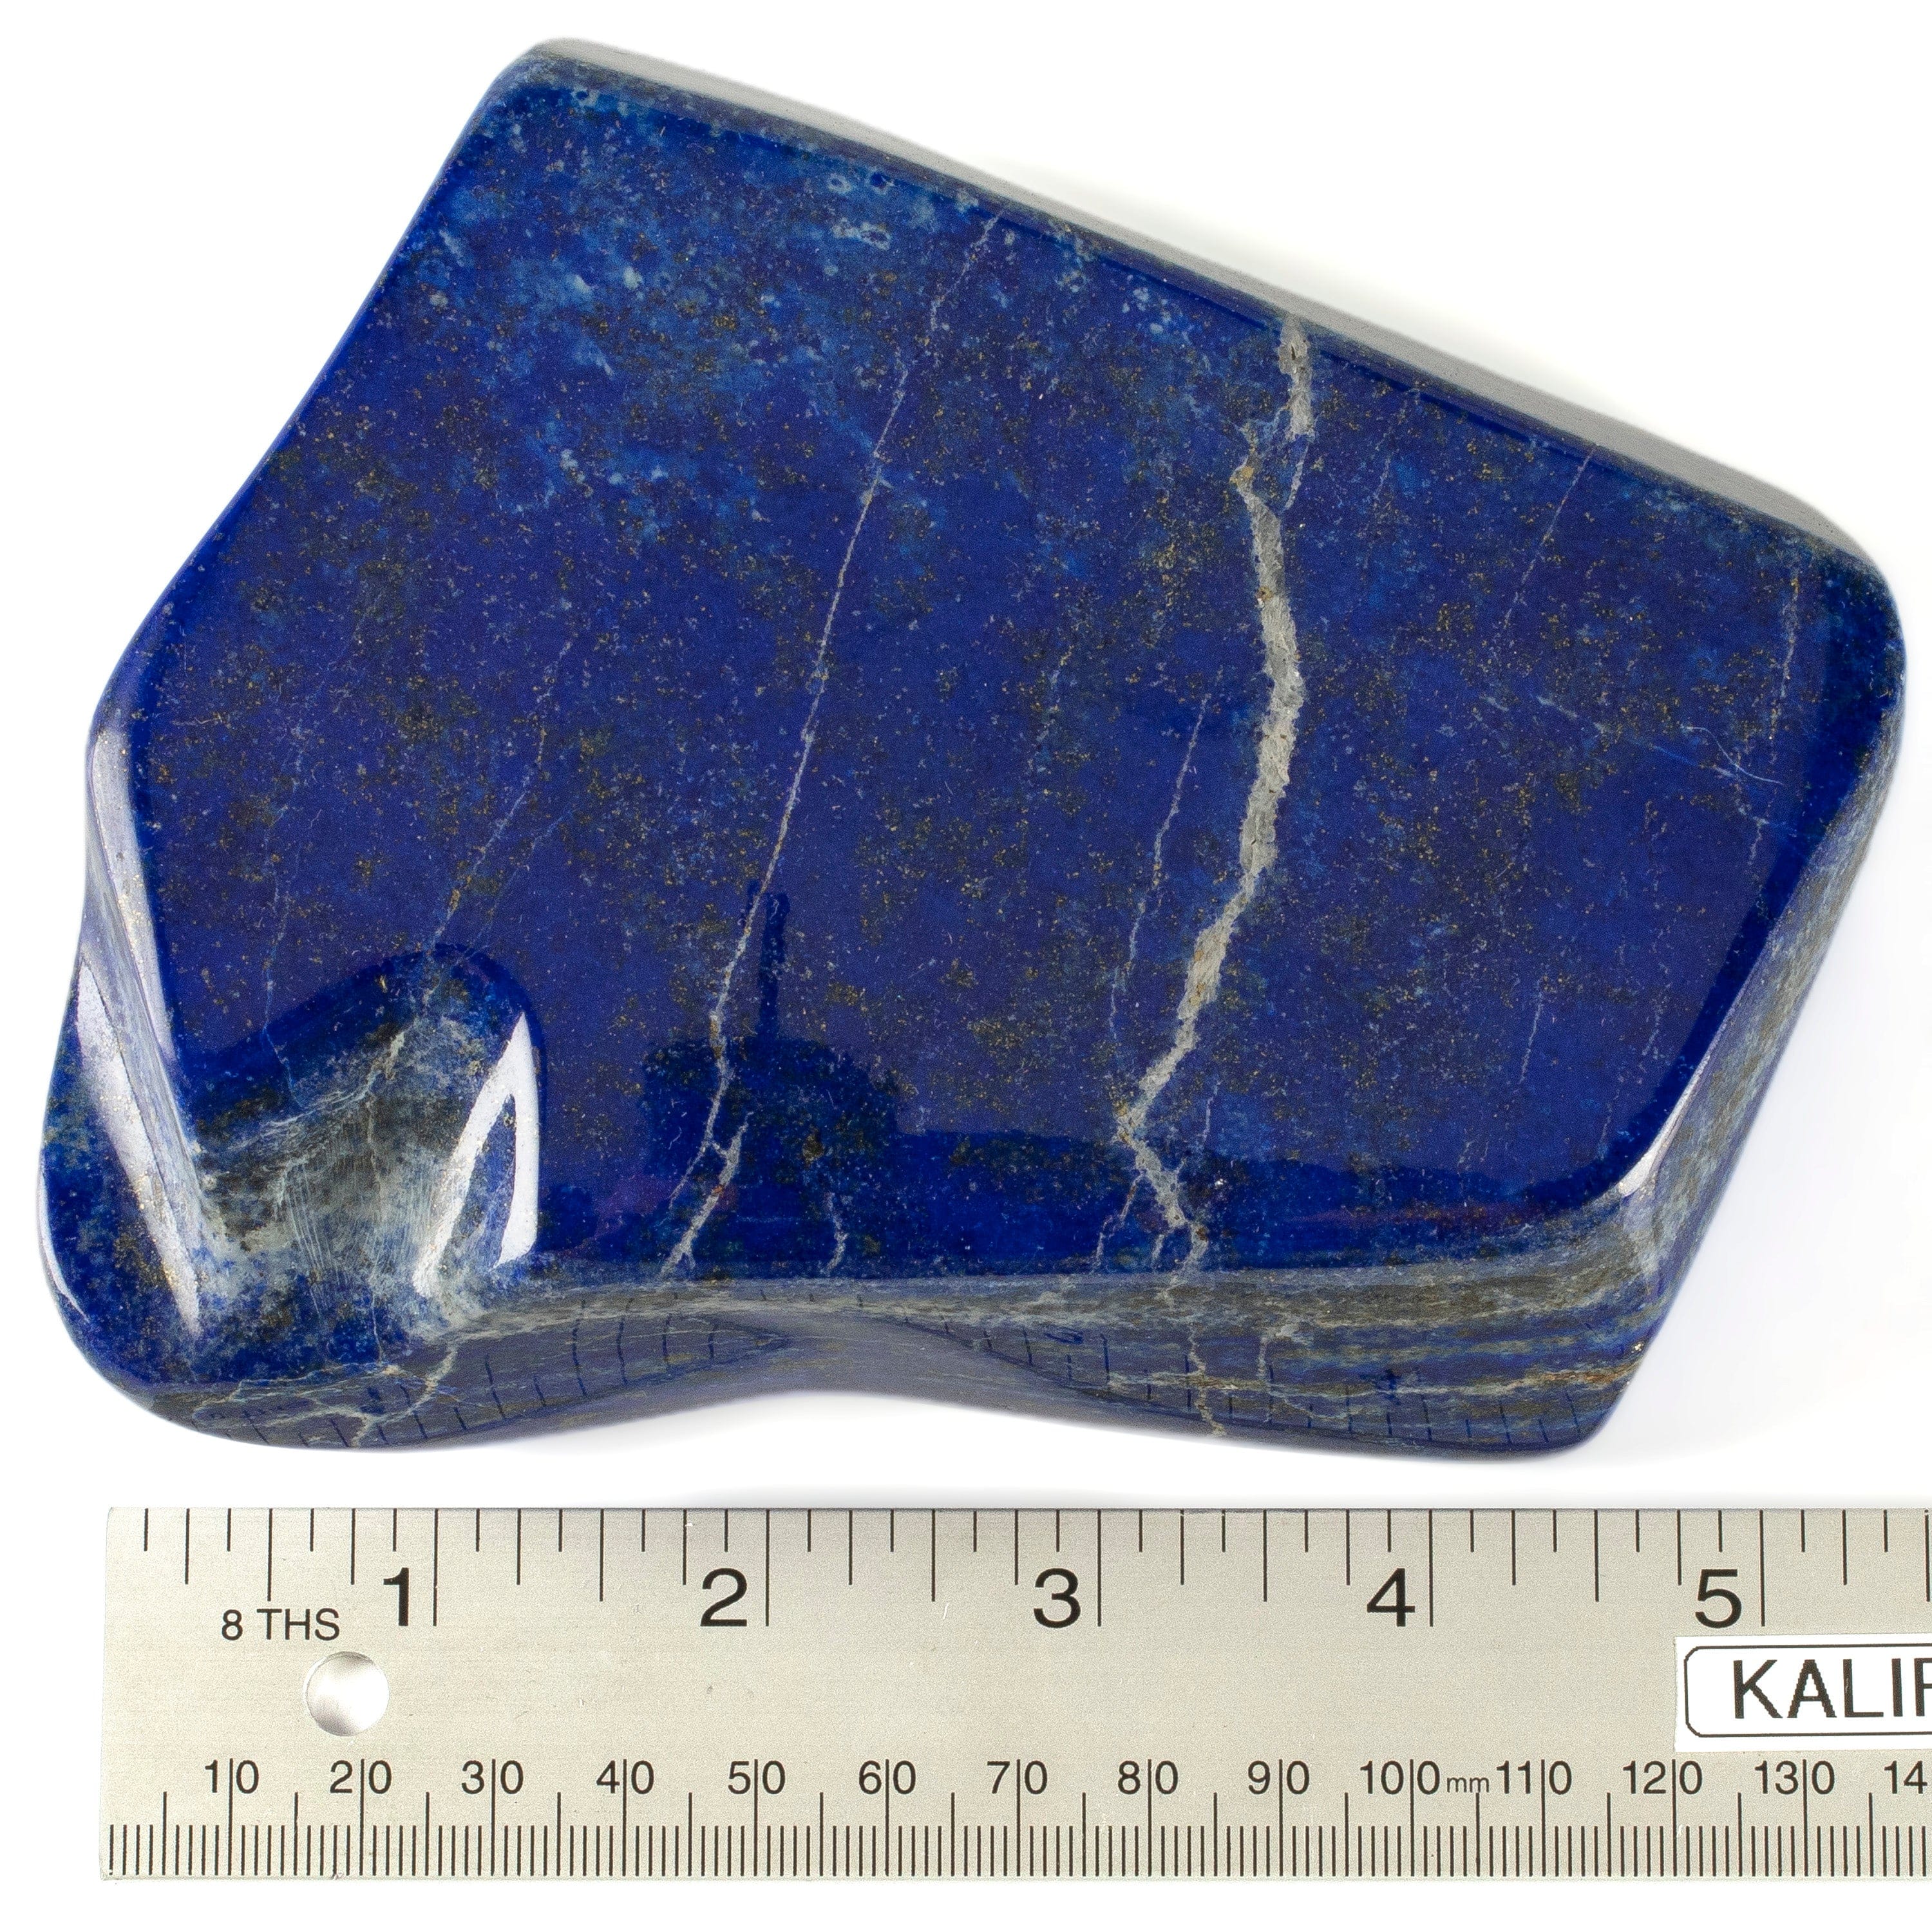 Kalifano Lapis Lapis Lazuli Freeform from Afghanistan - 5" / 1,350 grams LP1350.001